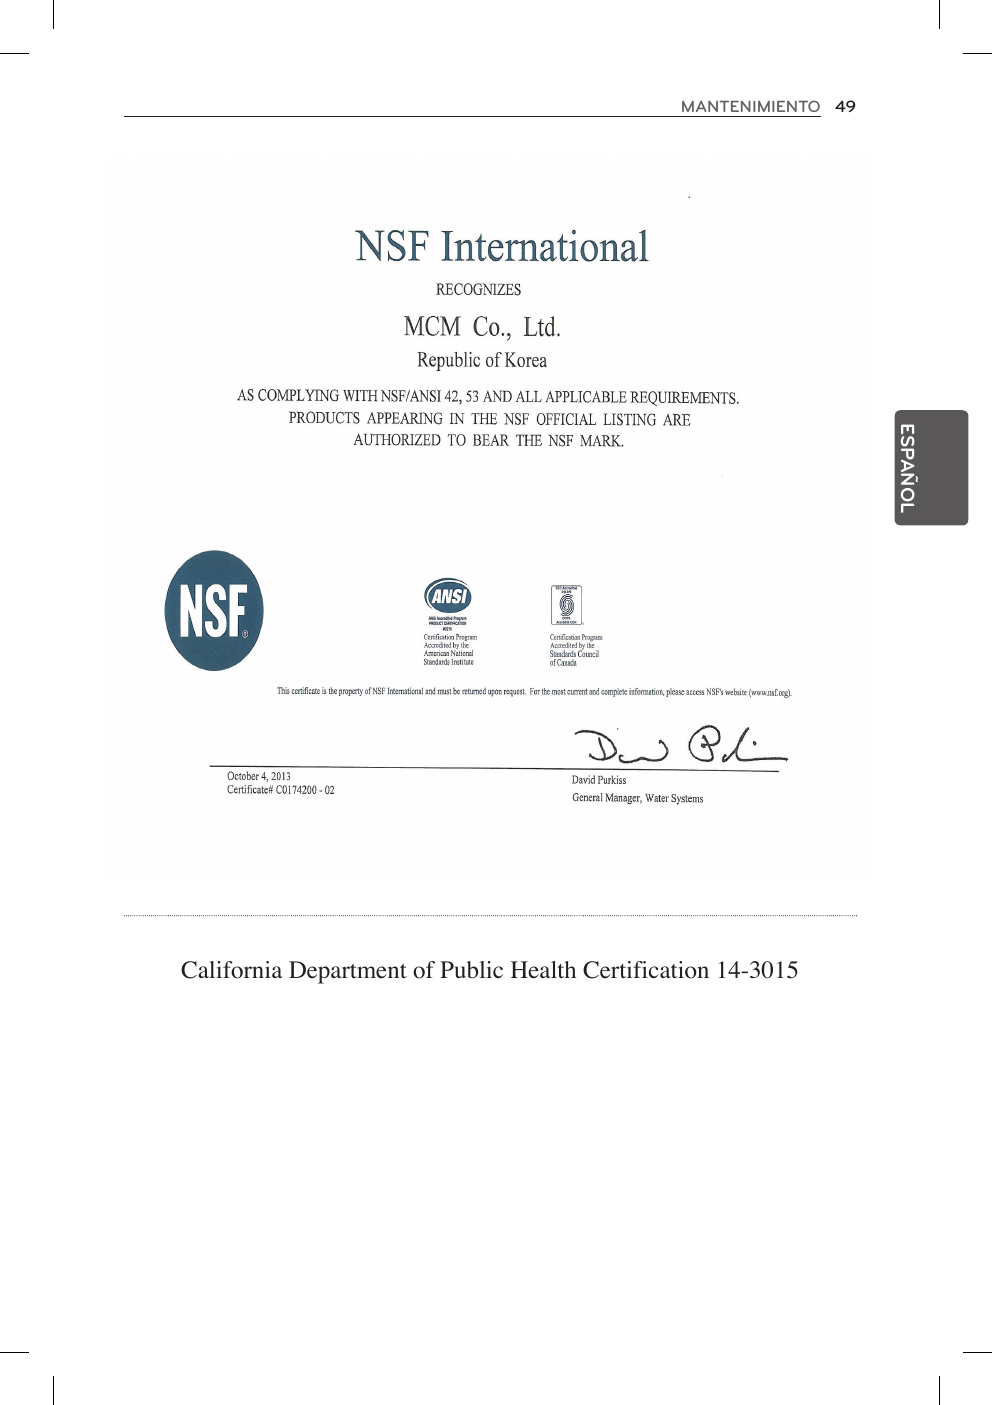 49MANTENIMIENTOESPAÑOLCalifornia Department of Public Health Certification 14-3015